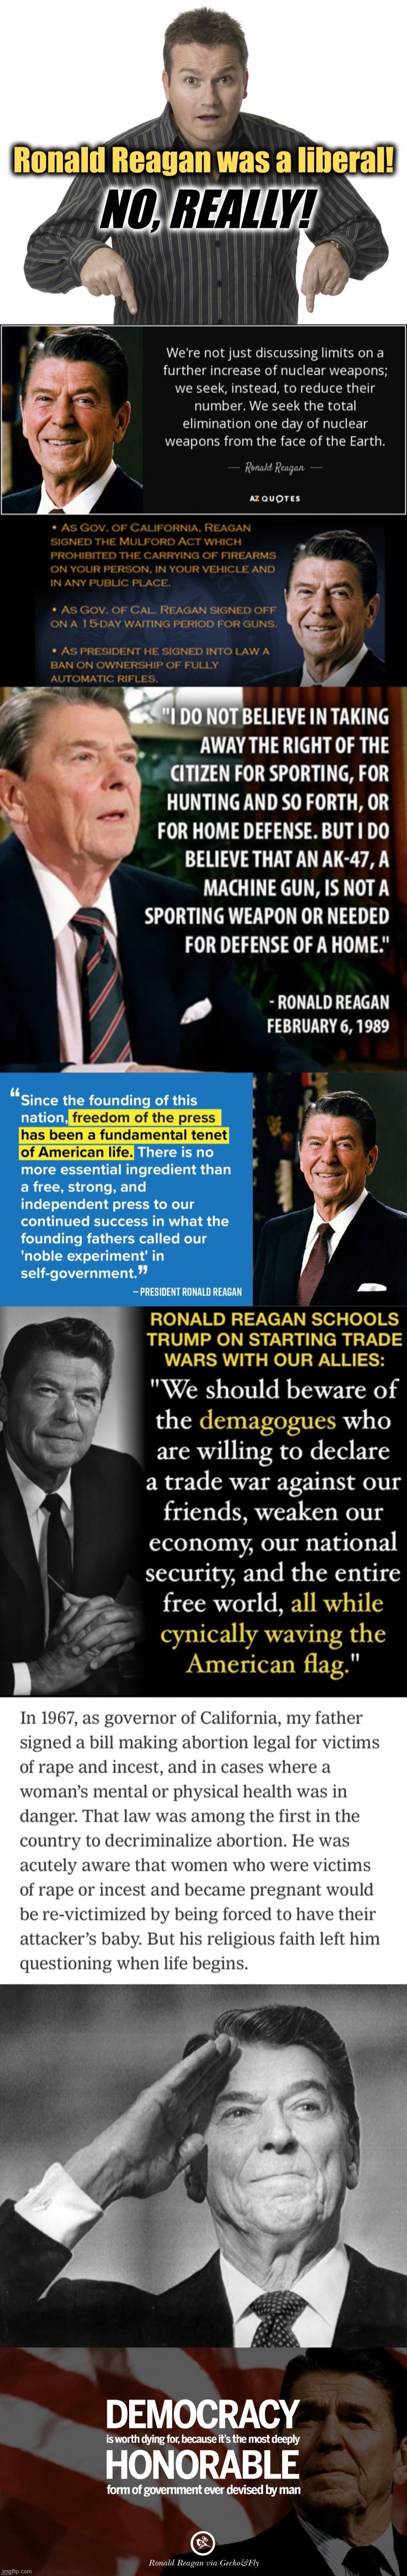 Ronald Reagan was a liberal - discuss | image tagged in ronald reagan was a liberal,ronald reagan,reagan,liberalism,liberal,democracy | made w/ Imgflip meme maker